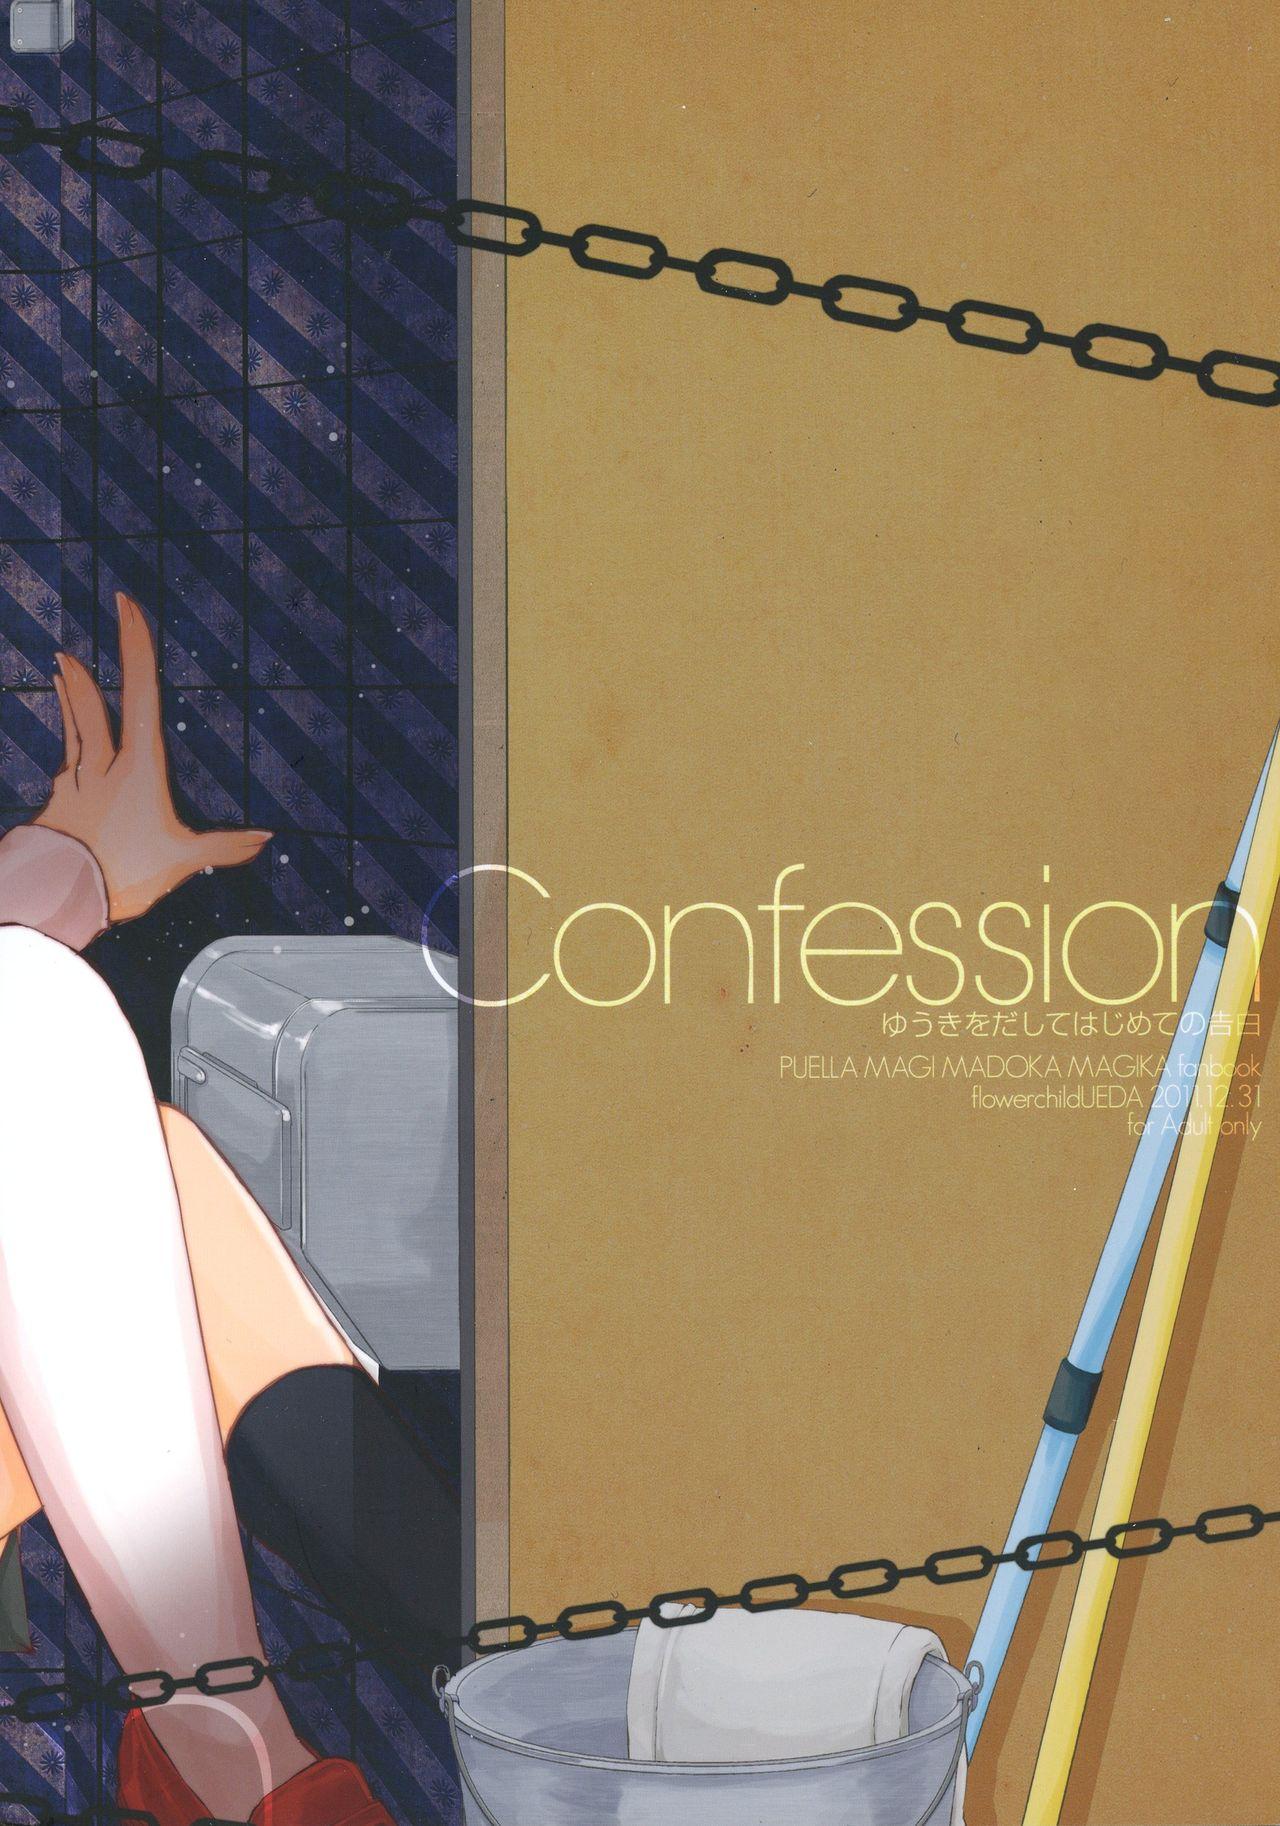 Confession 1